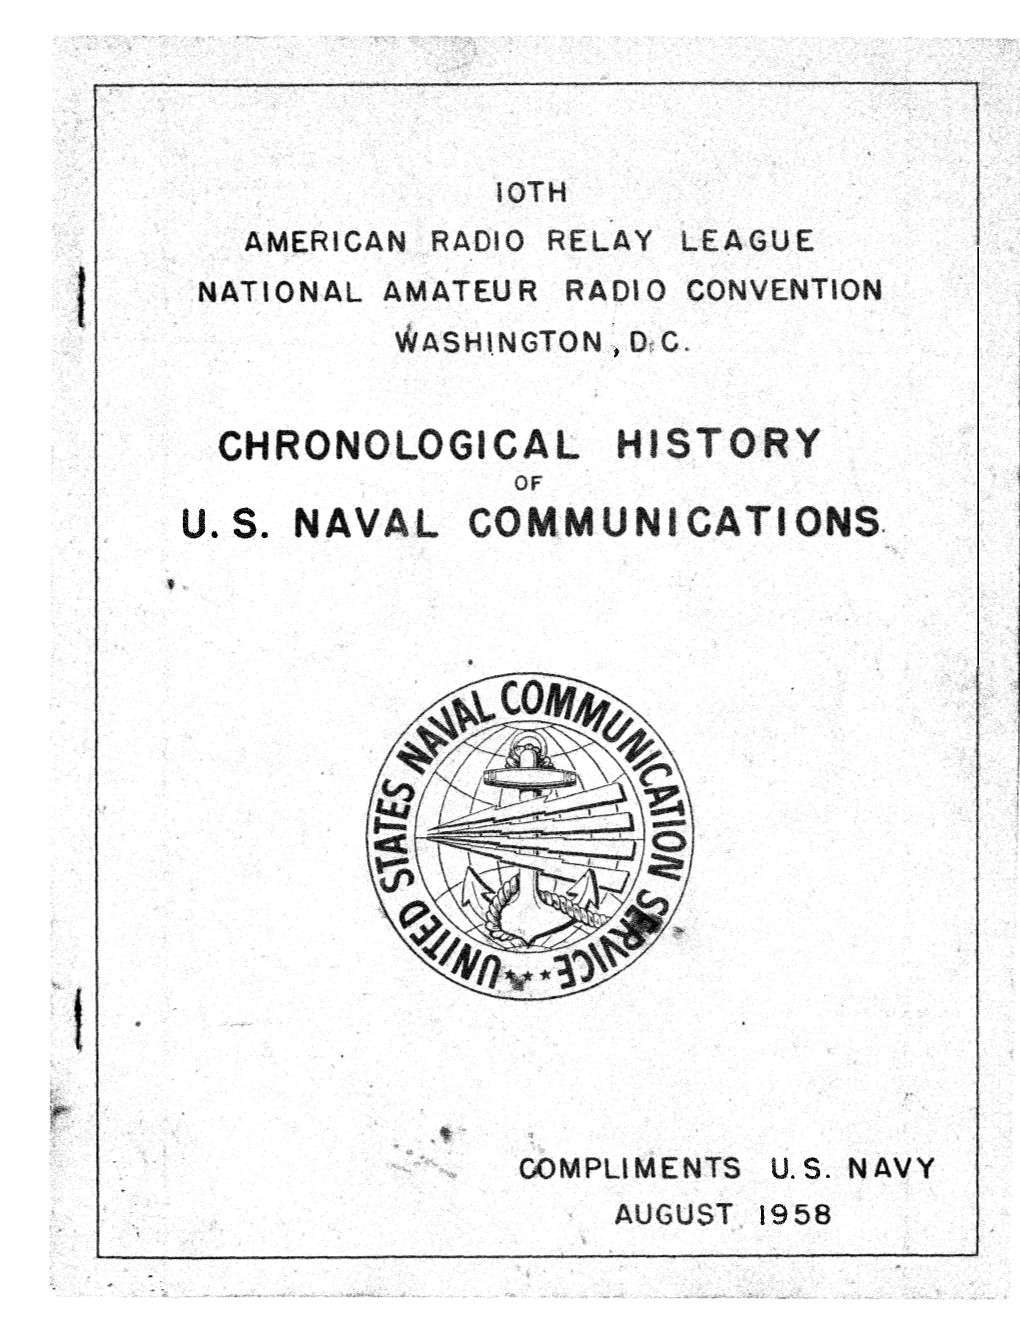 Chronological History U.S. Naval C Unications